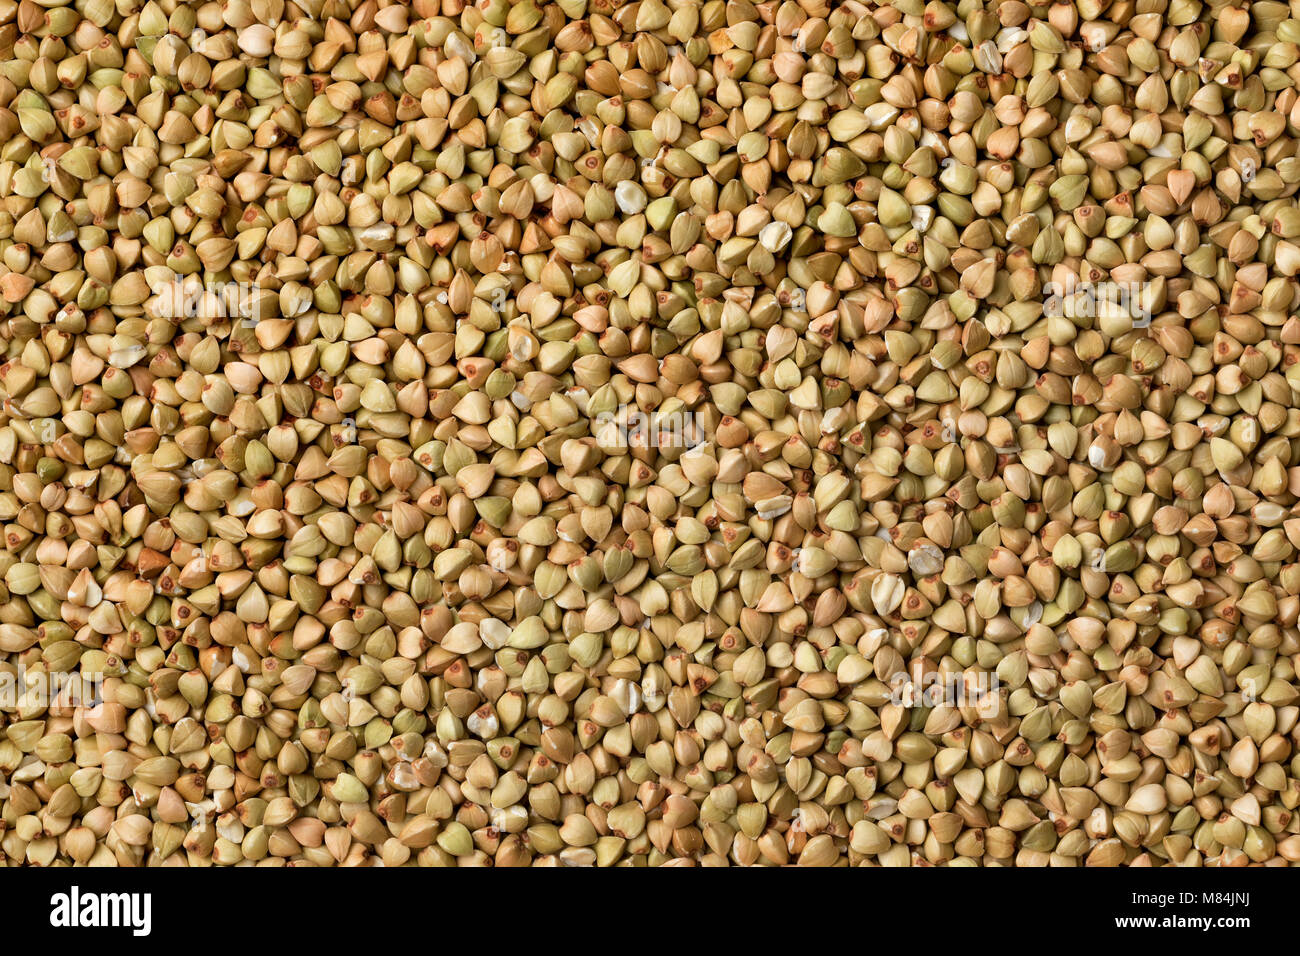 Dried buckwheat seeds full frame Stock Photo